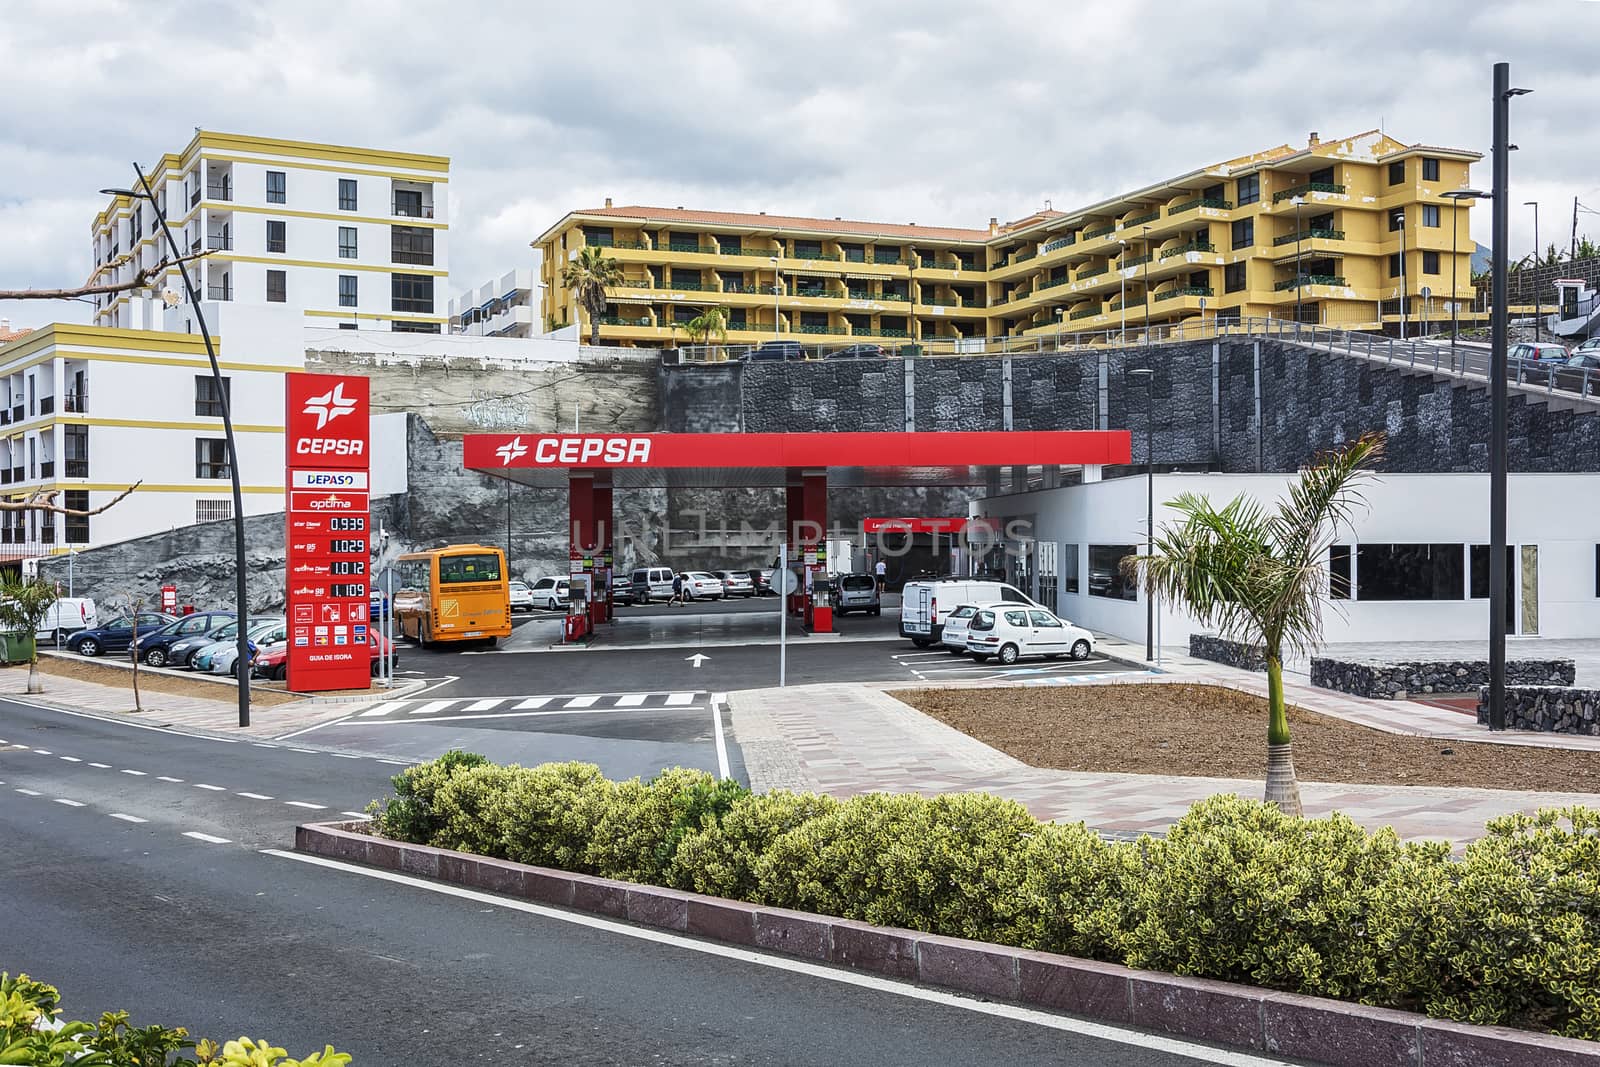 Automobile gas station CEPSA (Tenerife, Spain) by Grommik